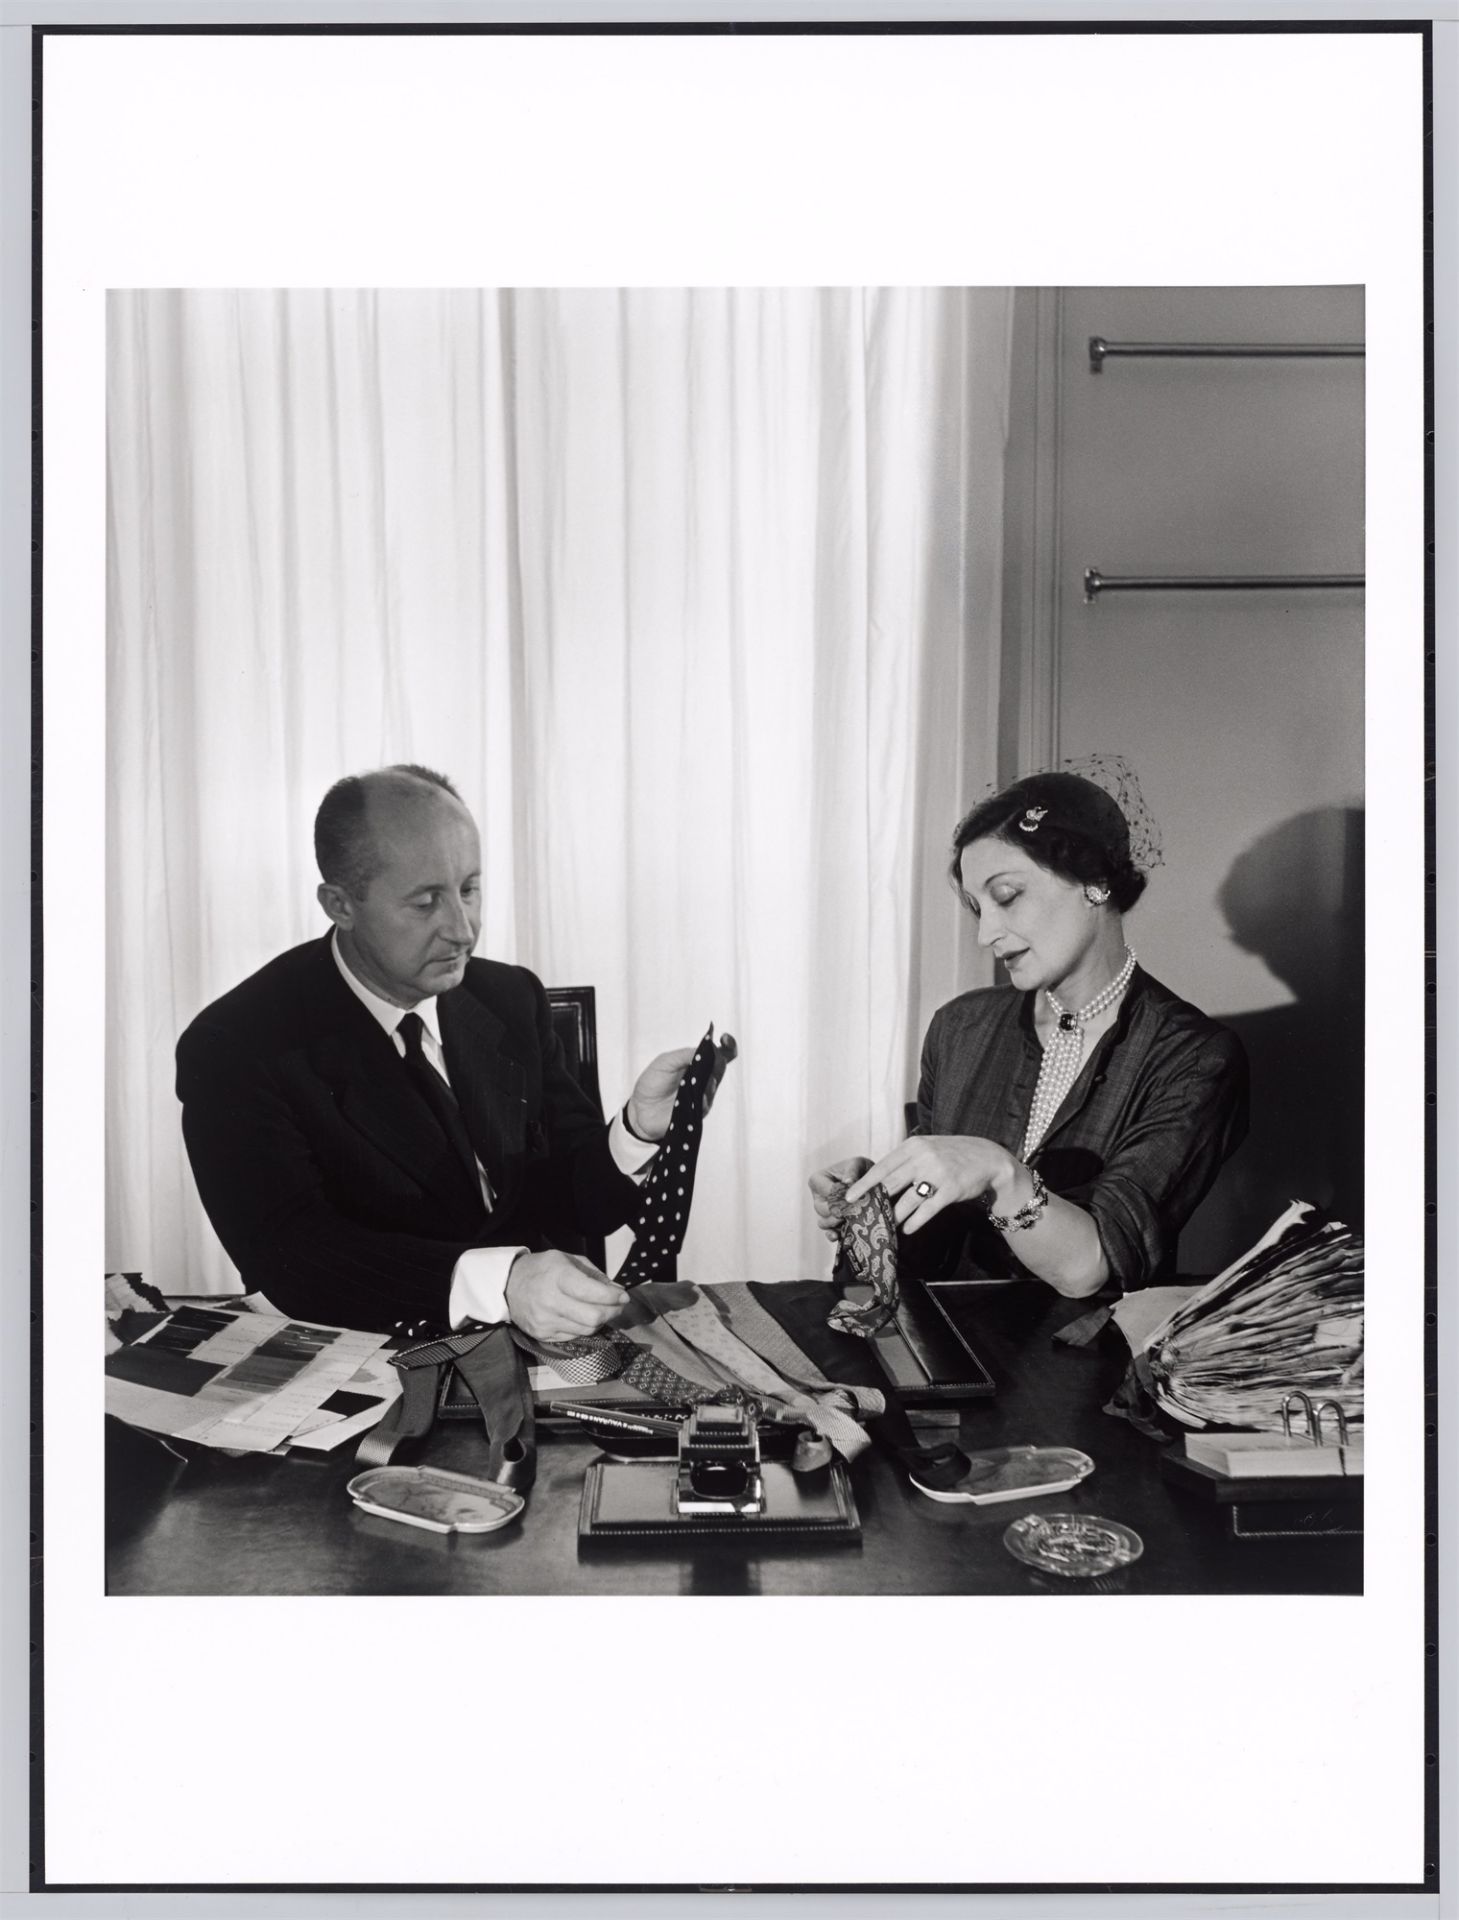 Willy Maywald. Monsieur Dior et Madame Bricard - Le Choix des Cravates. Circa 1950 - Image 2 of 4